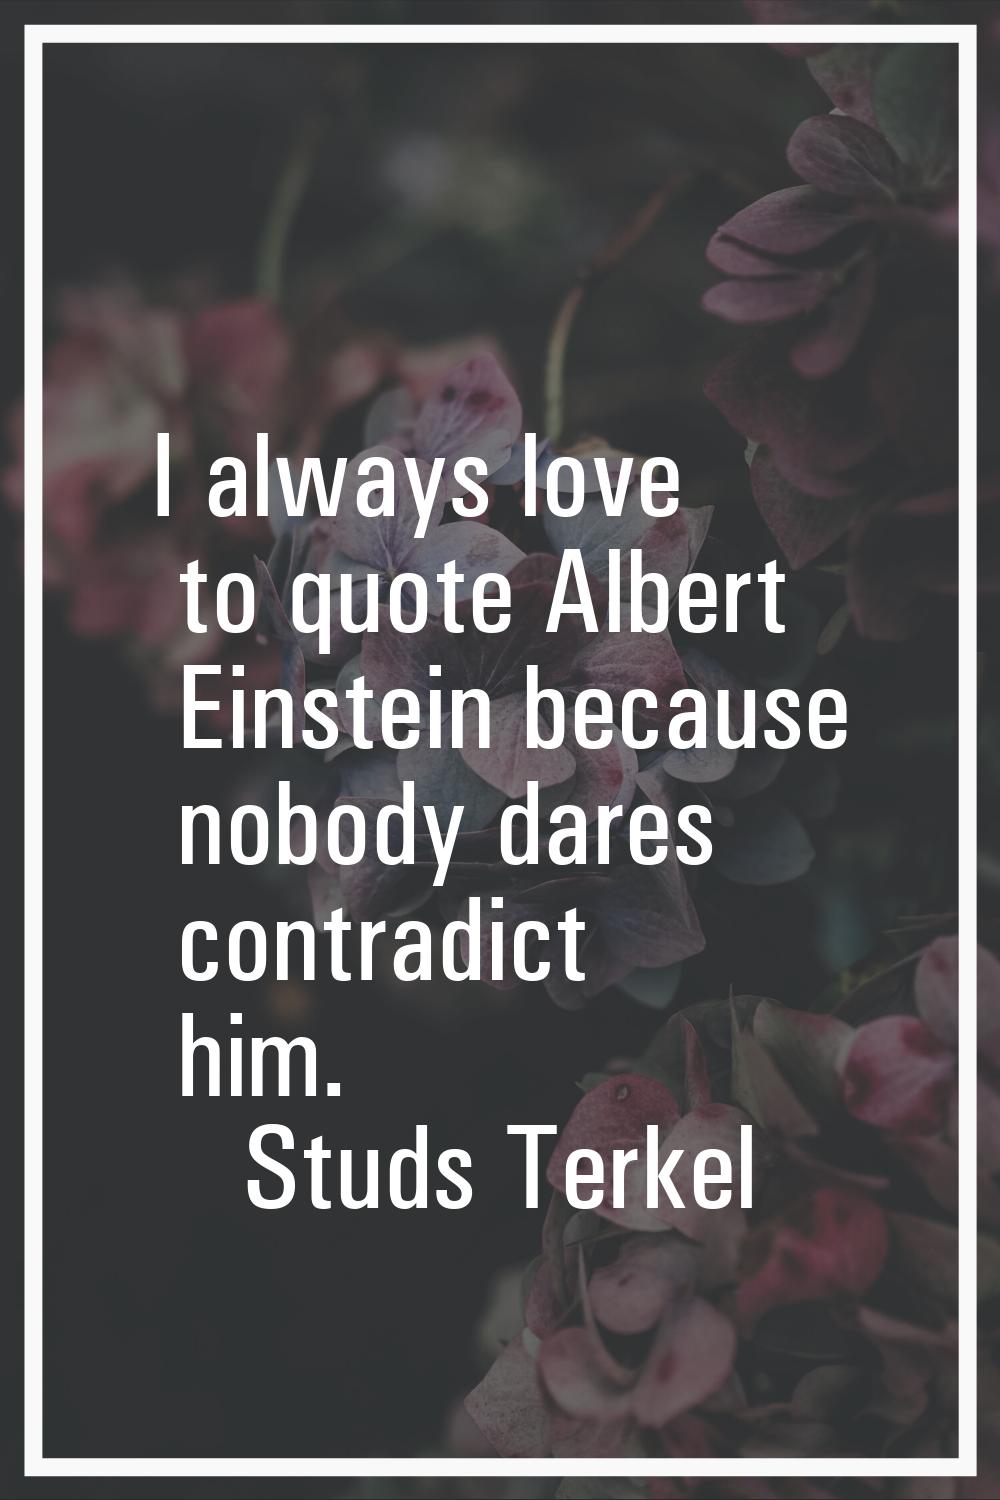 I always love to quote Albert Einstein because nobody dares contradict him.